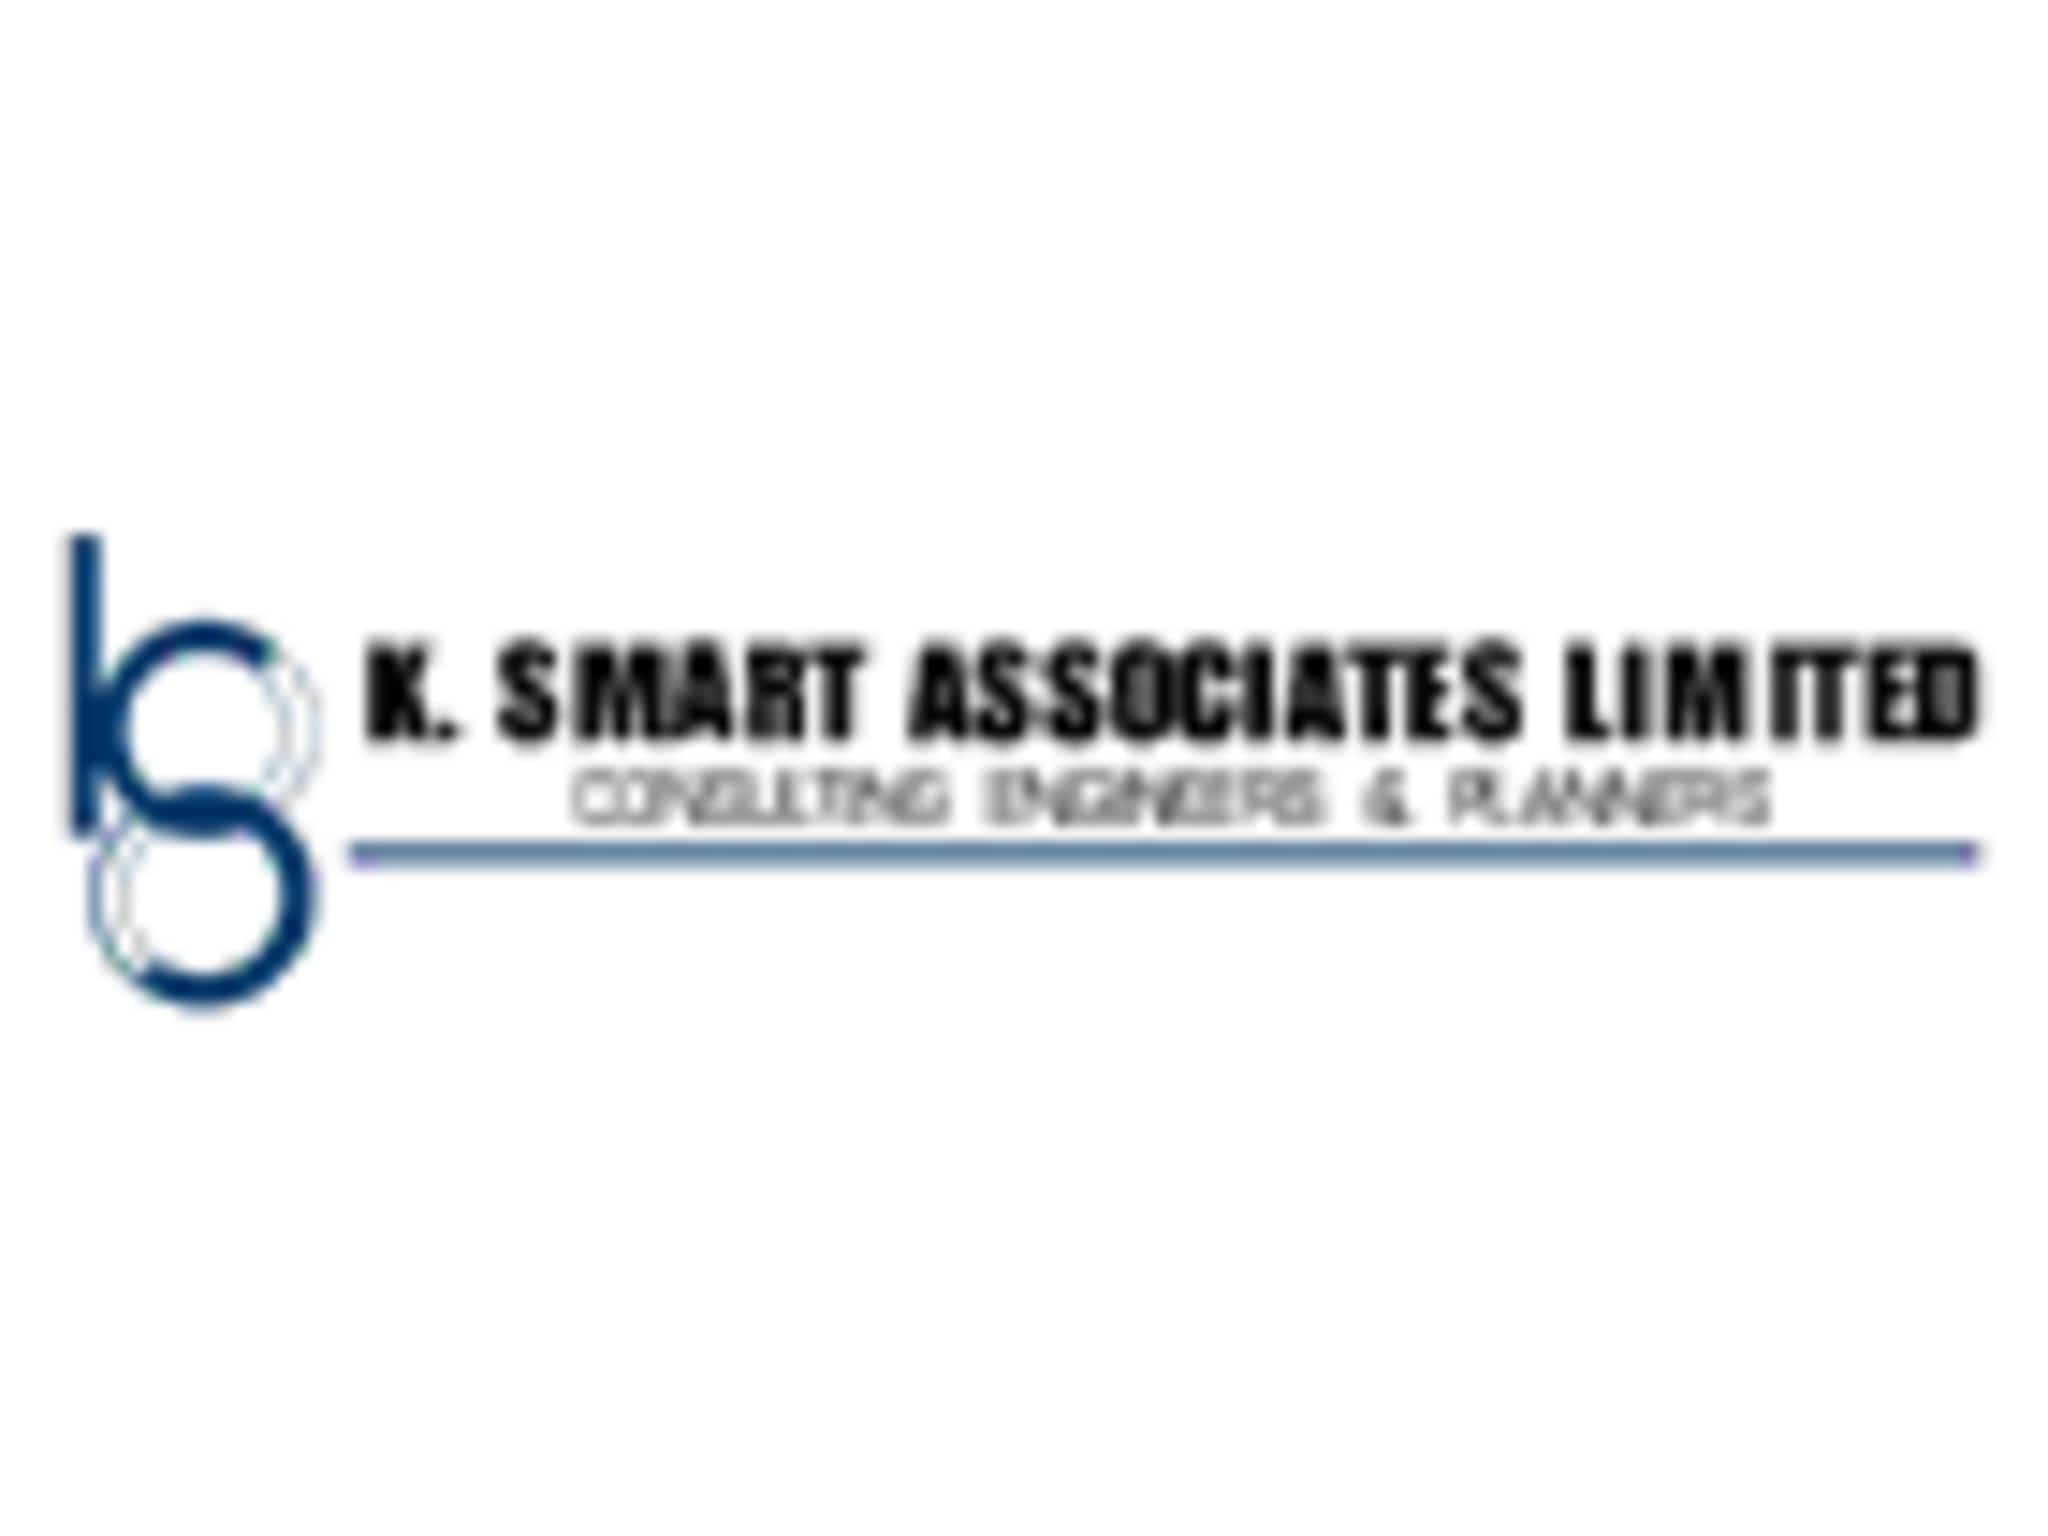 photo K Smart Associates Limited